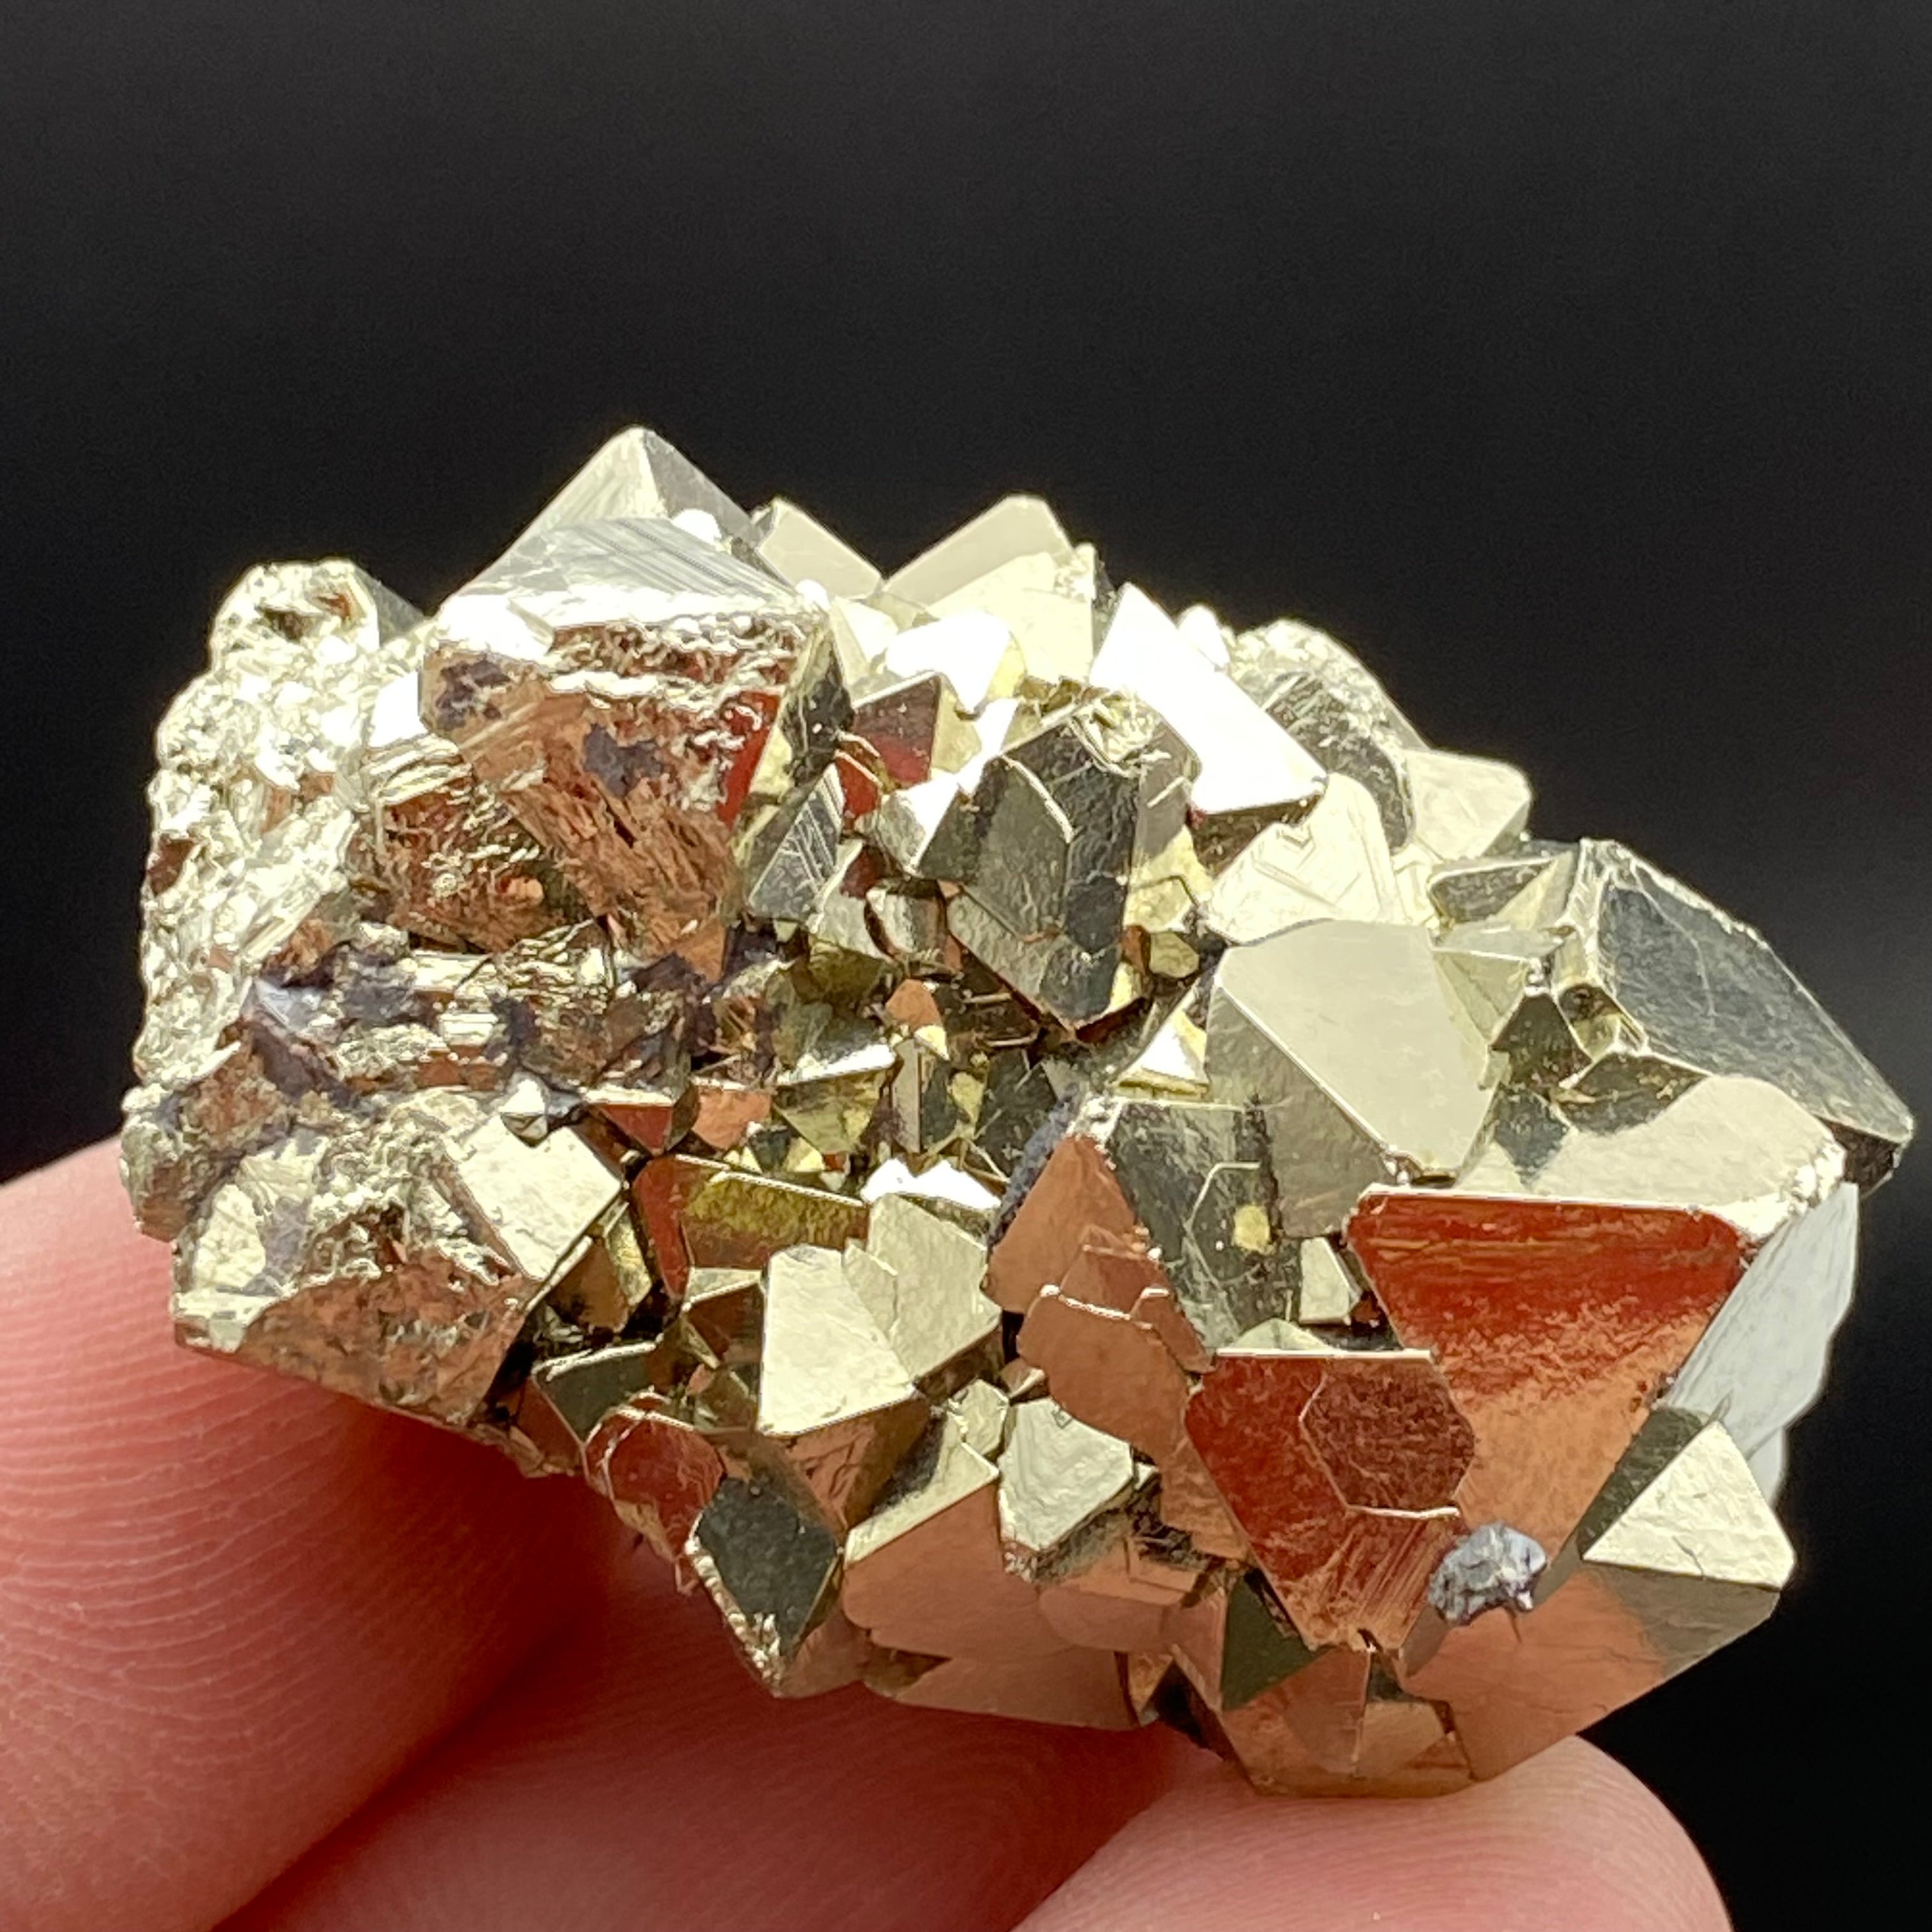 Peruvian Pyrite Crystal - 103